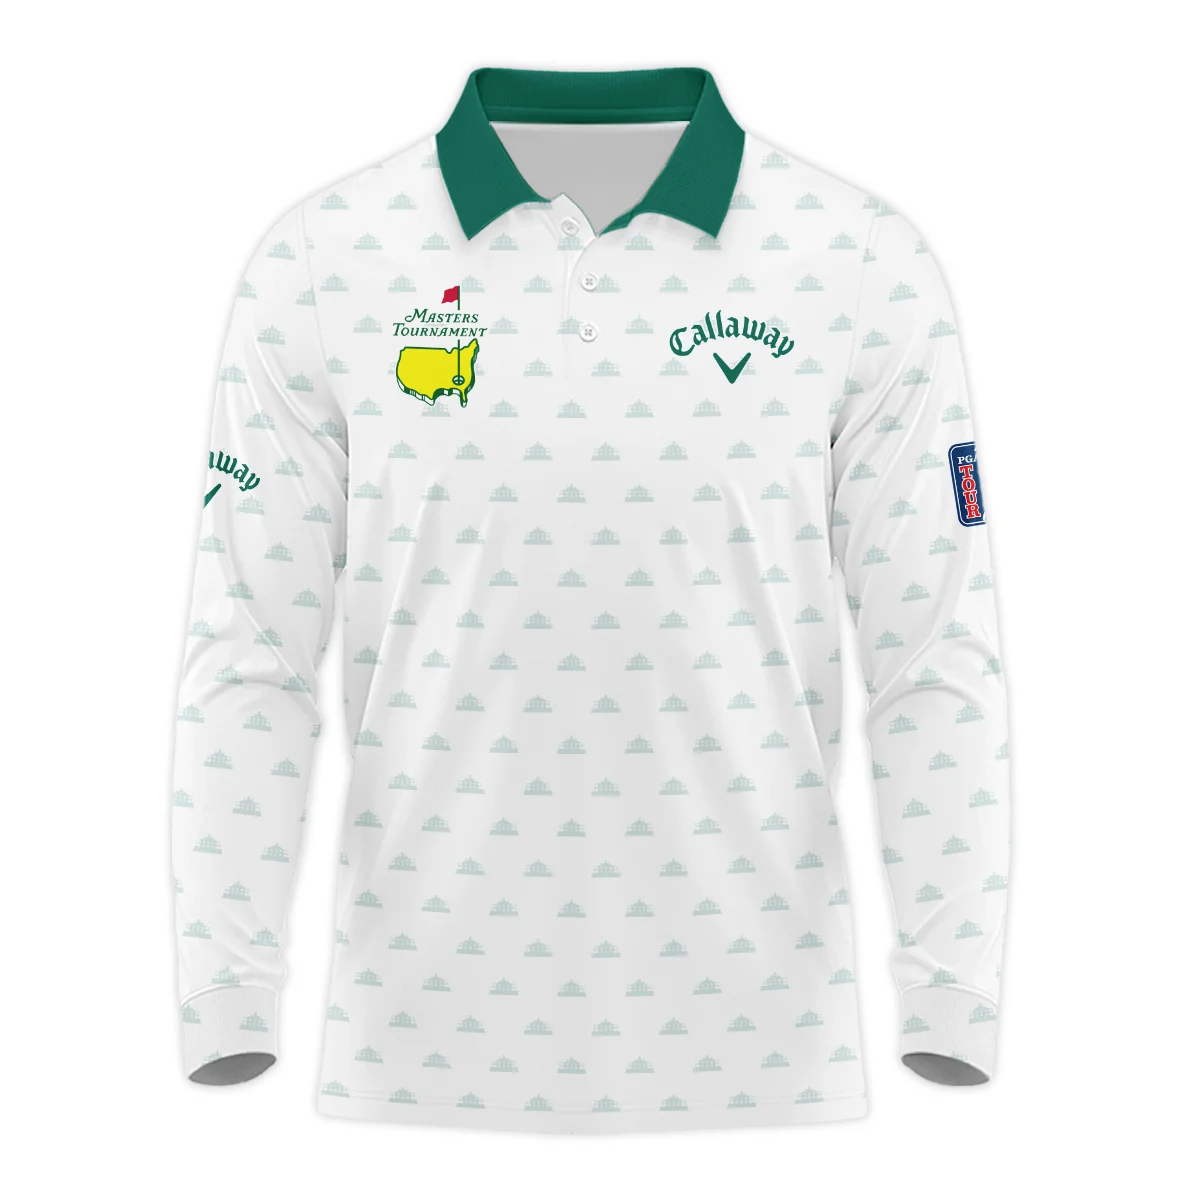 Masters Tournament Golf Sport Callaway Zipper Polo Shirt Sports Cup Pattern White Green Zipper Polo Shirt For Men